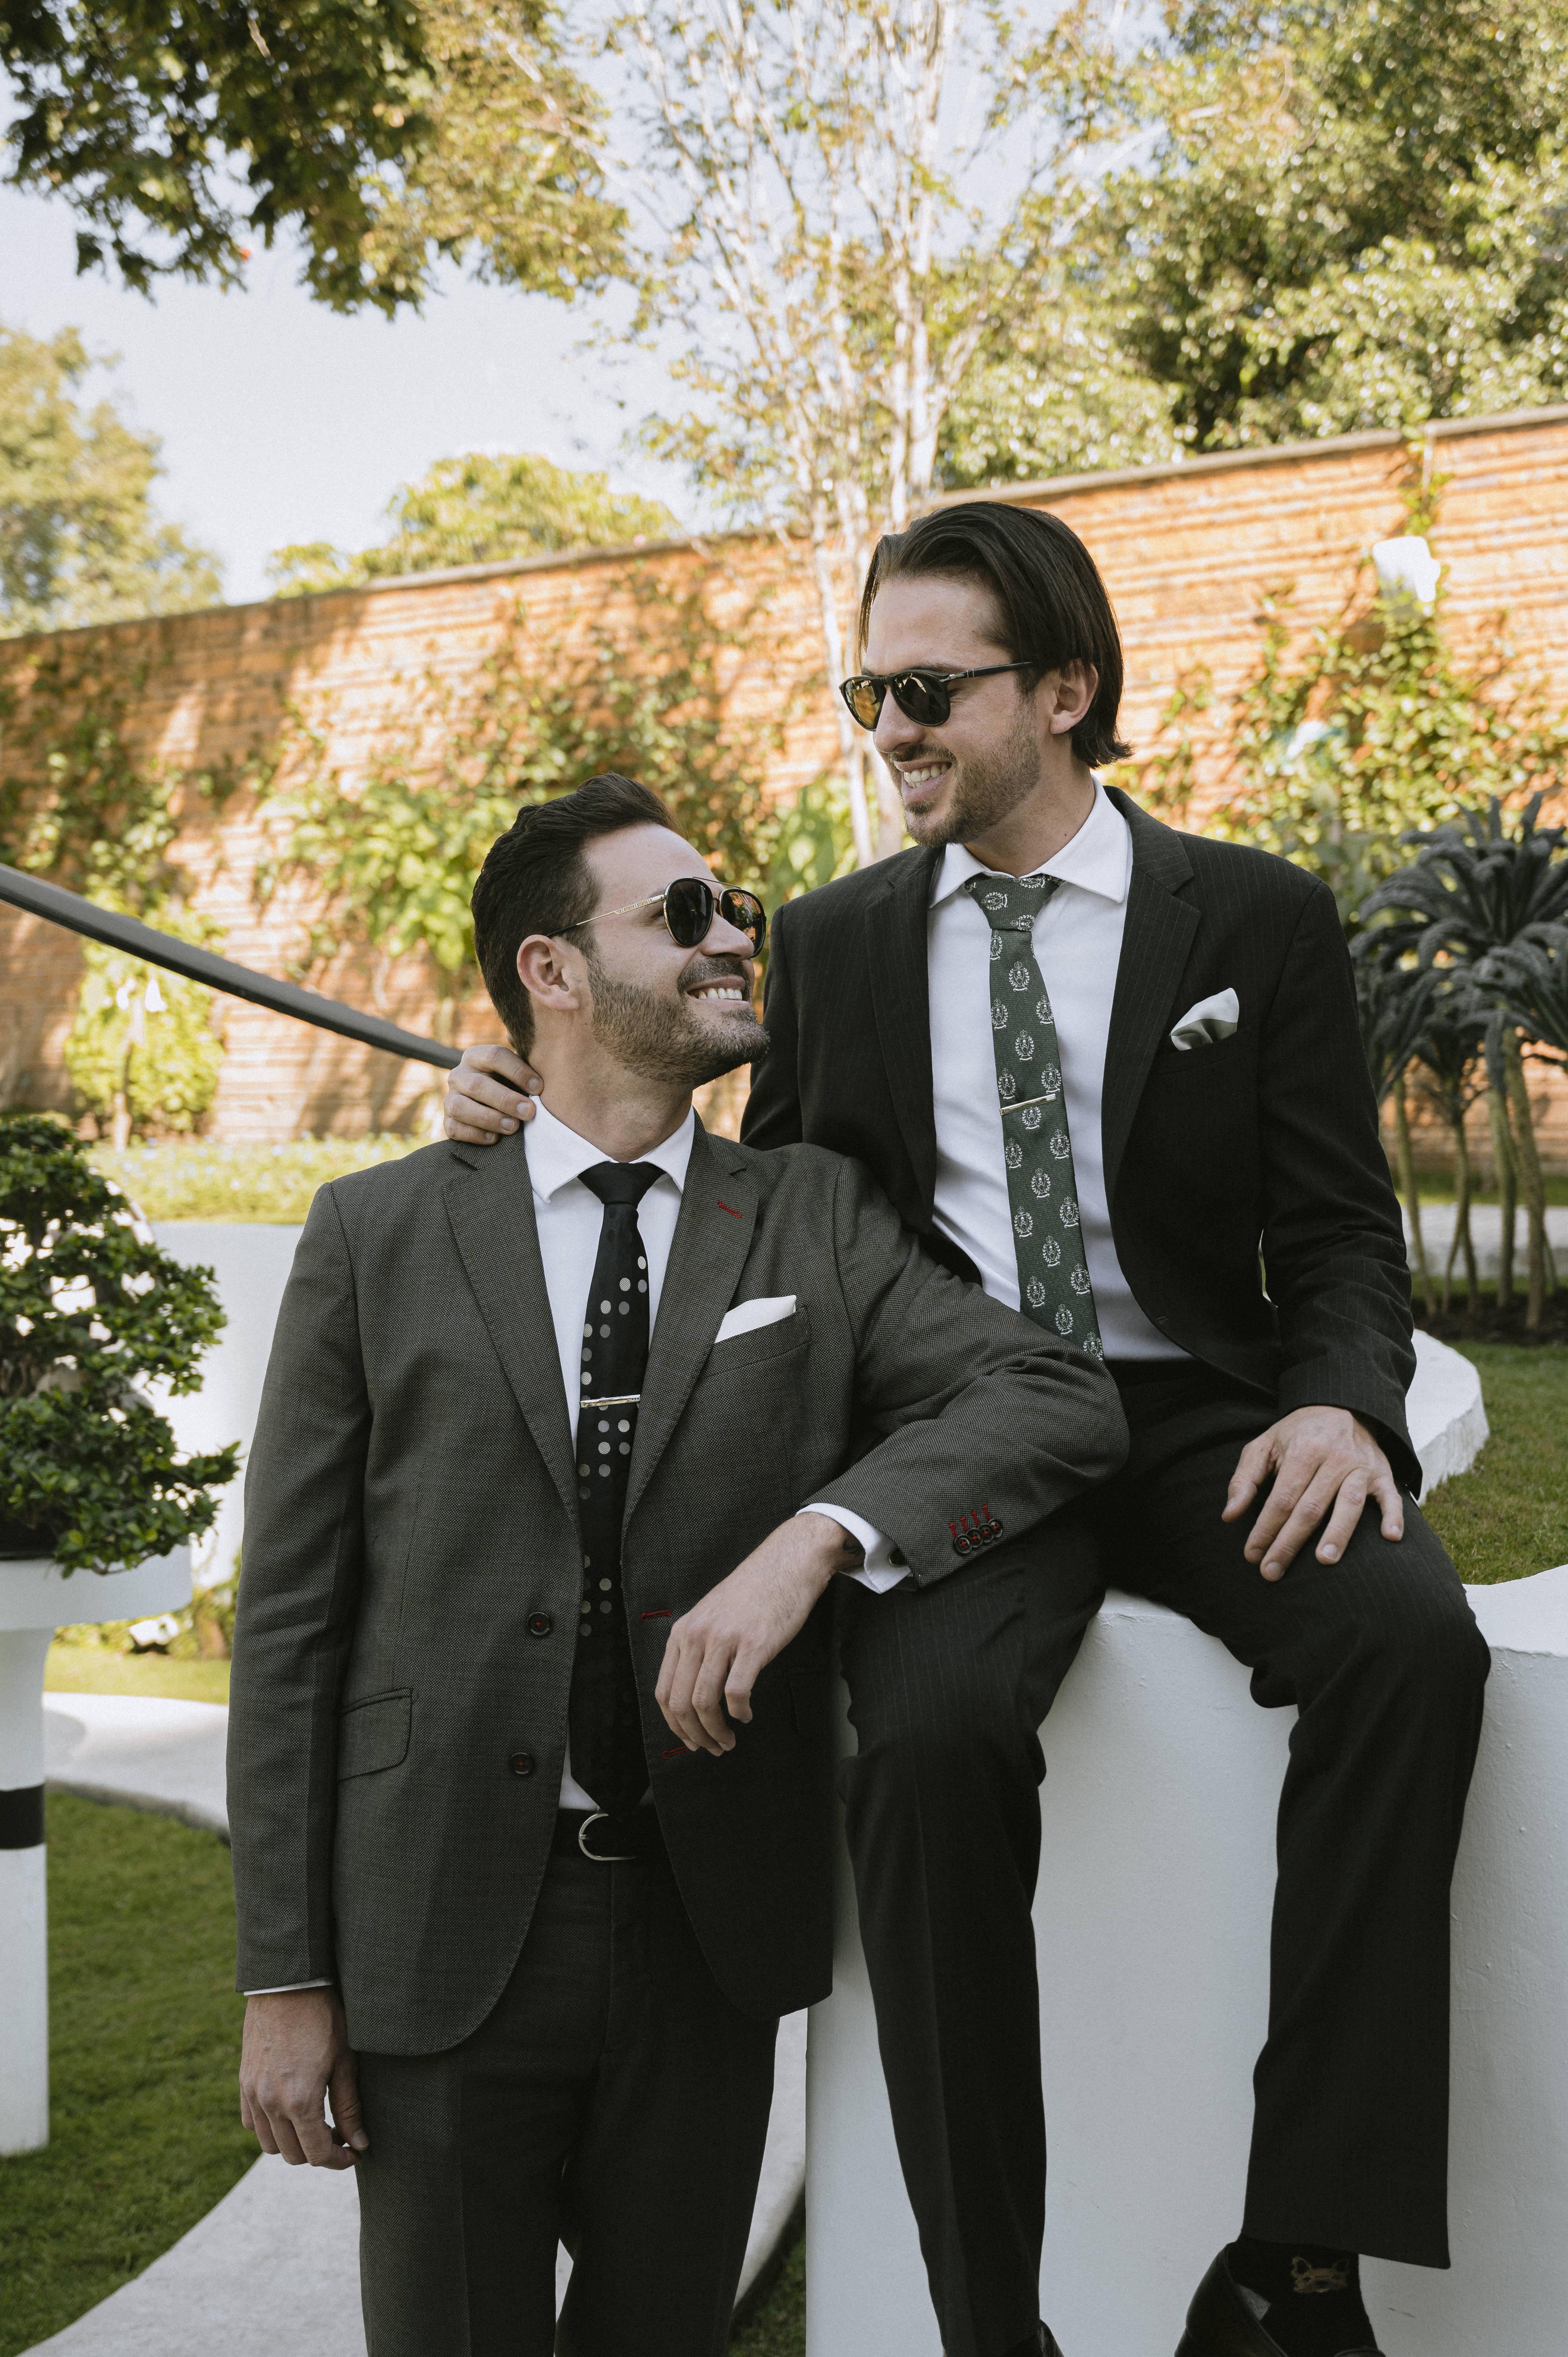 The Wedding Website of Augusto Castillo and Alvaro Ruiz